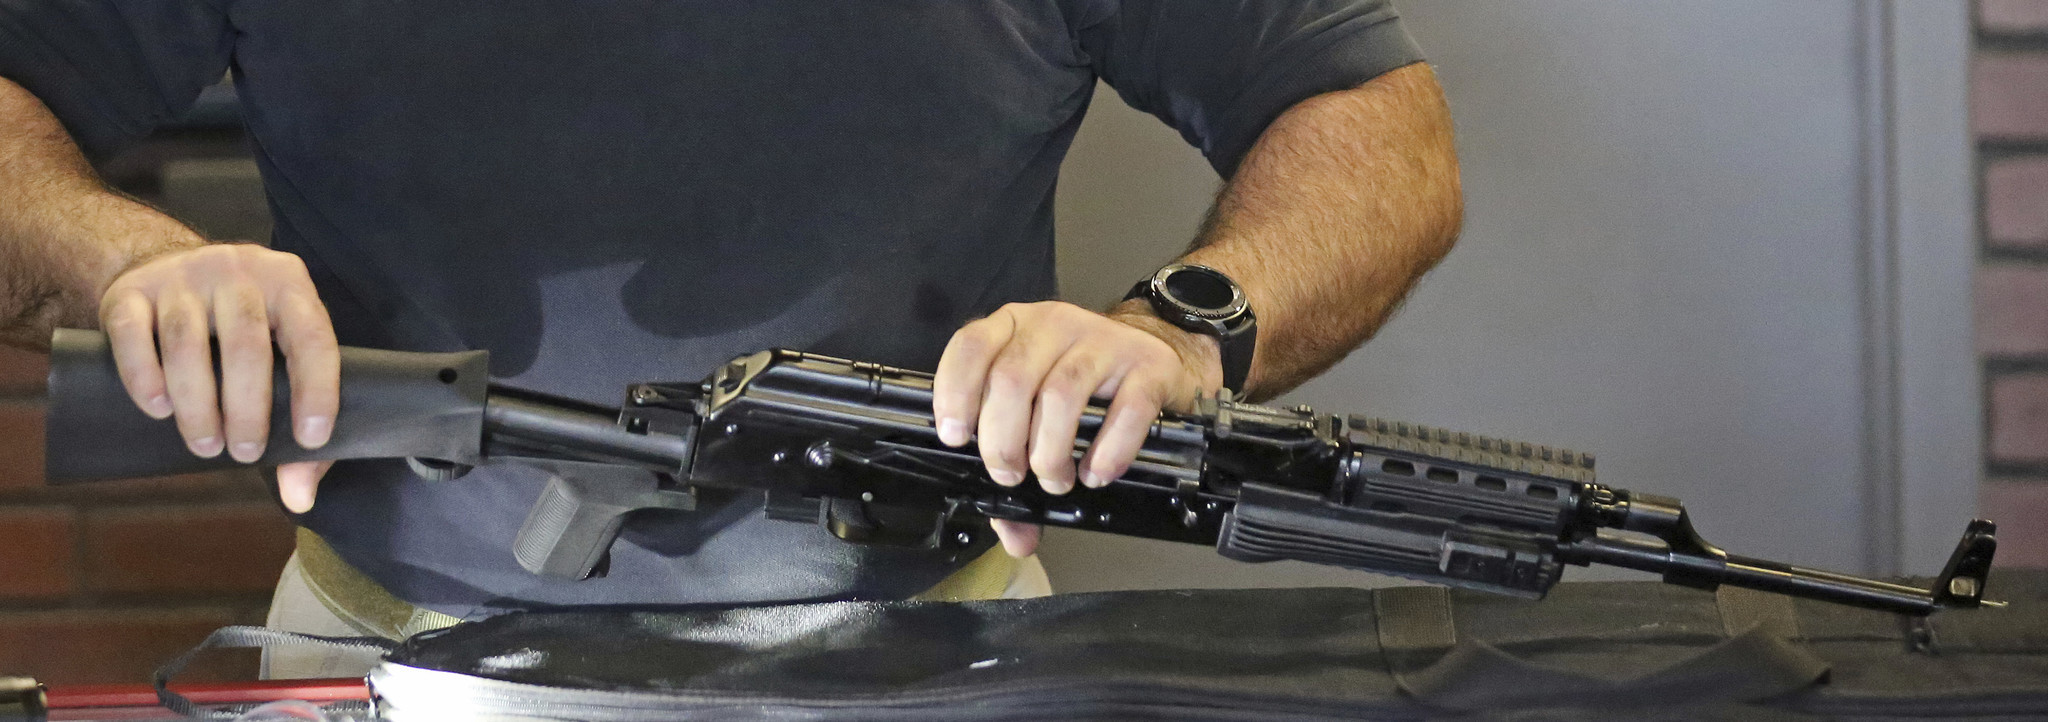 Clark Aposhian, chairman of the Utah Shooting Sports Council, demonstrates attaching a "bump stock" to a semiautomatic rifle.